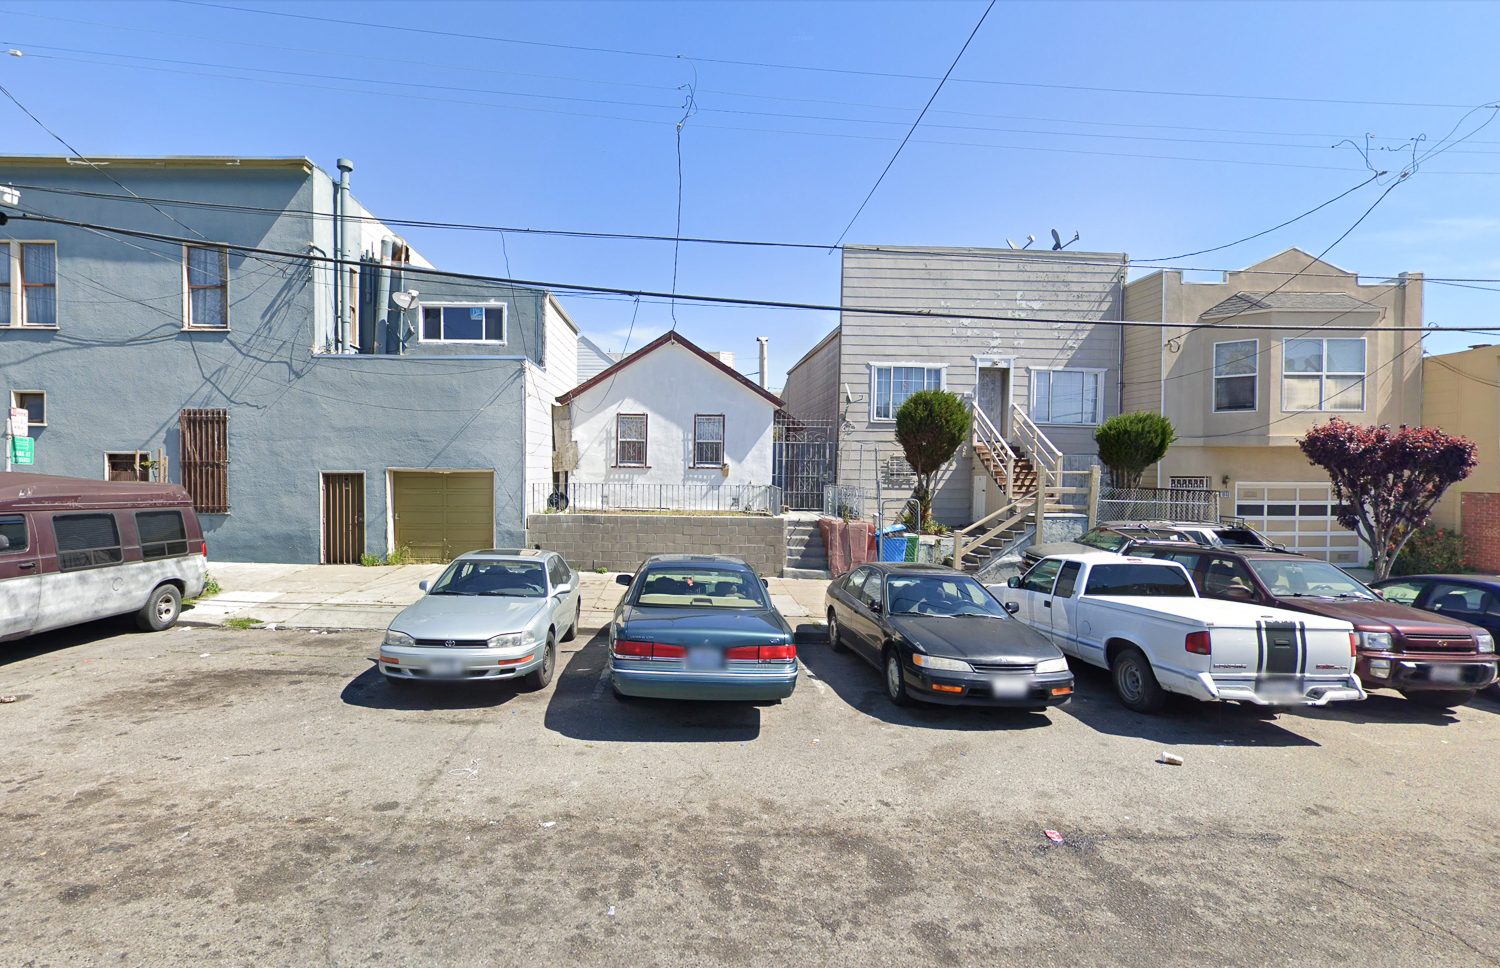 1660 Shafter Avenue, image via Google Street View